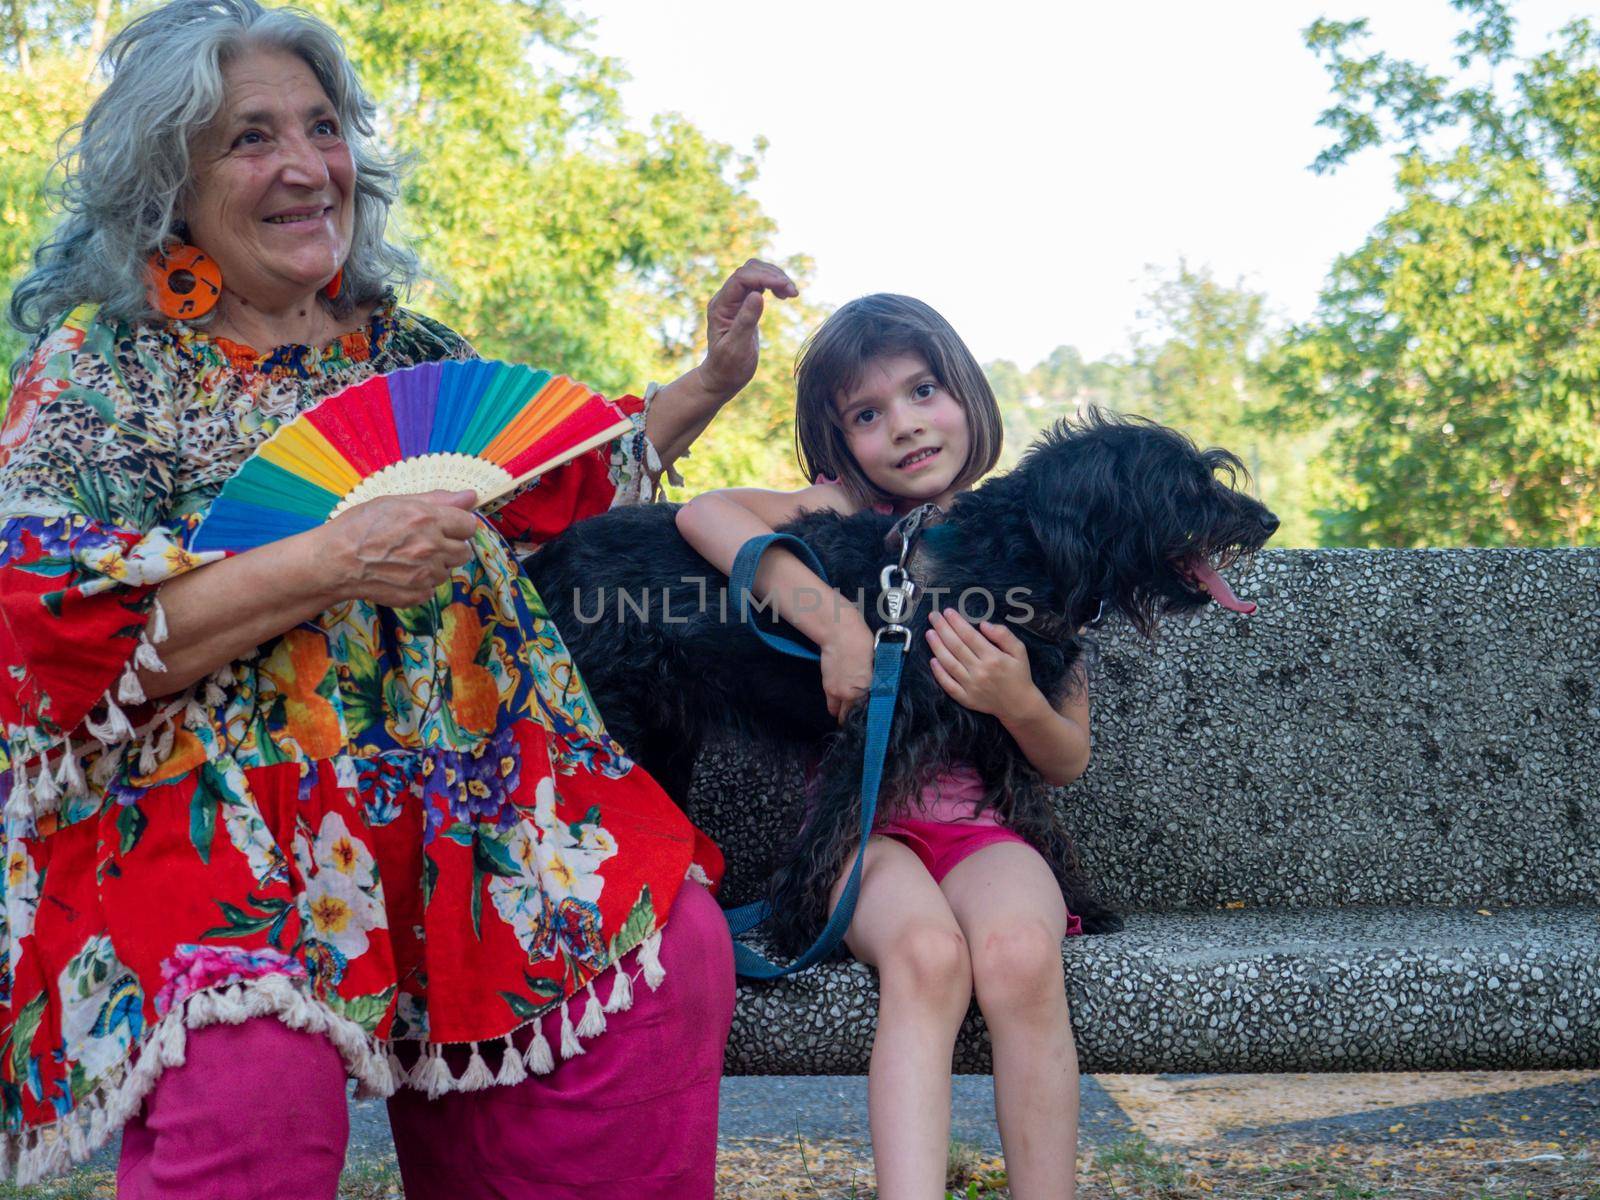 grandma , granddaughter and dog enjoying outdoors on a bench by verbano